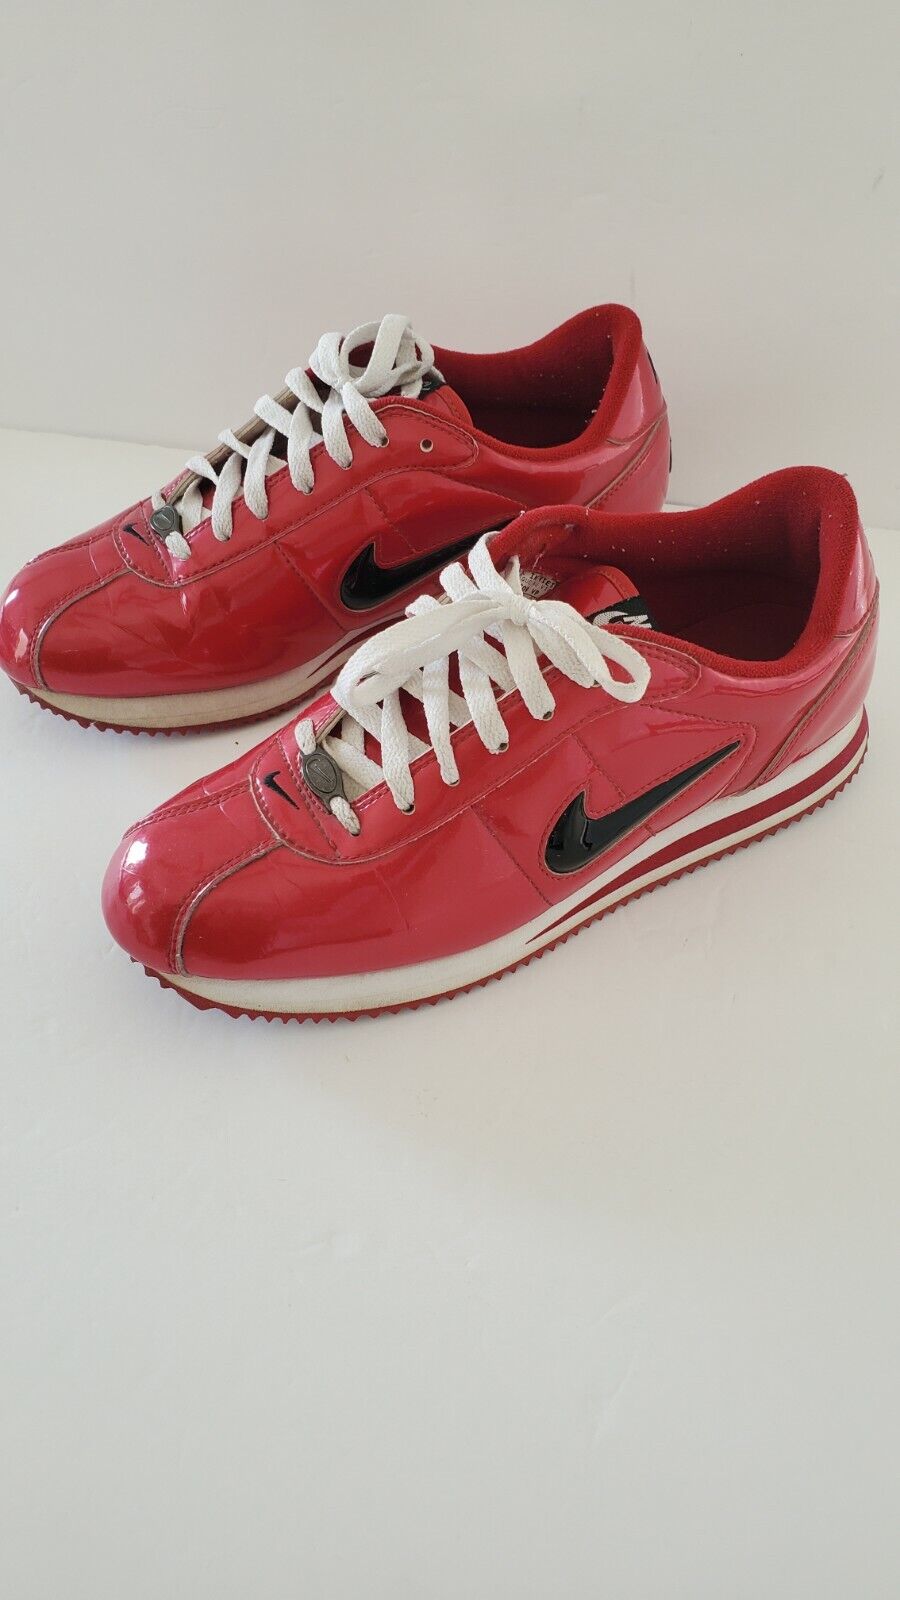 Haciendo azufre zona Nike Cortez jewel red patent leather rare mens 9 shoes vintage | eBay